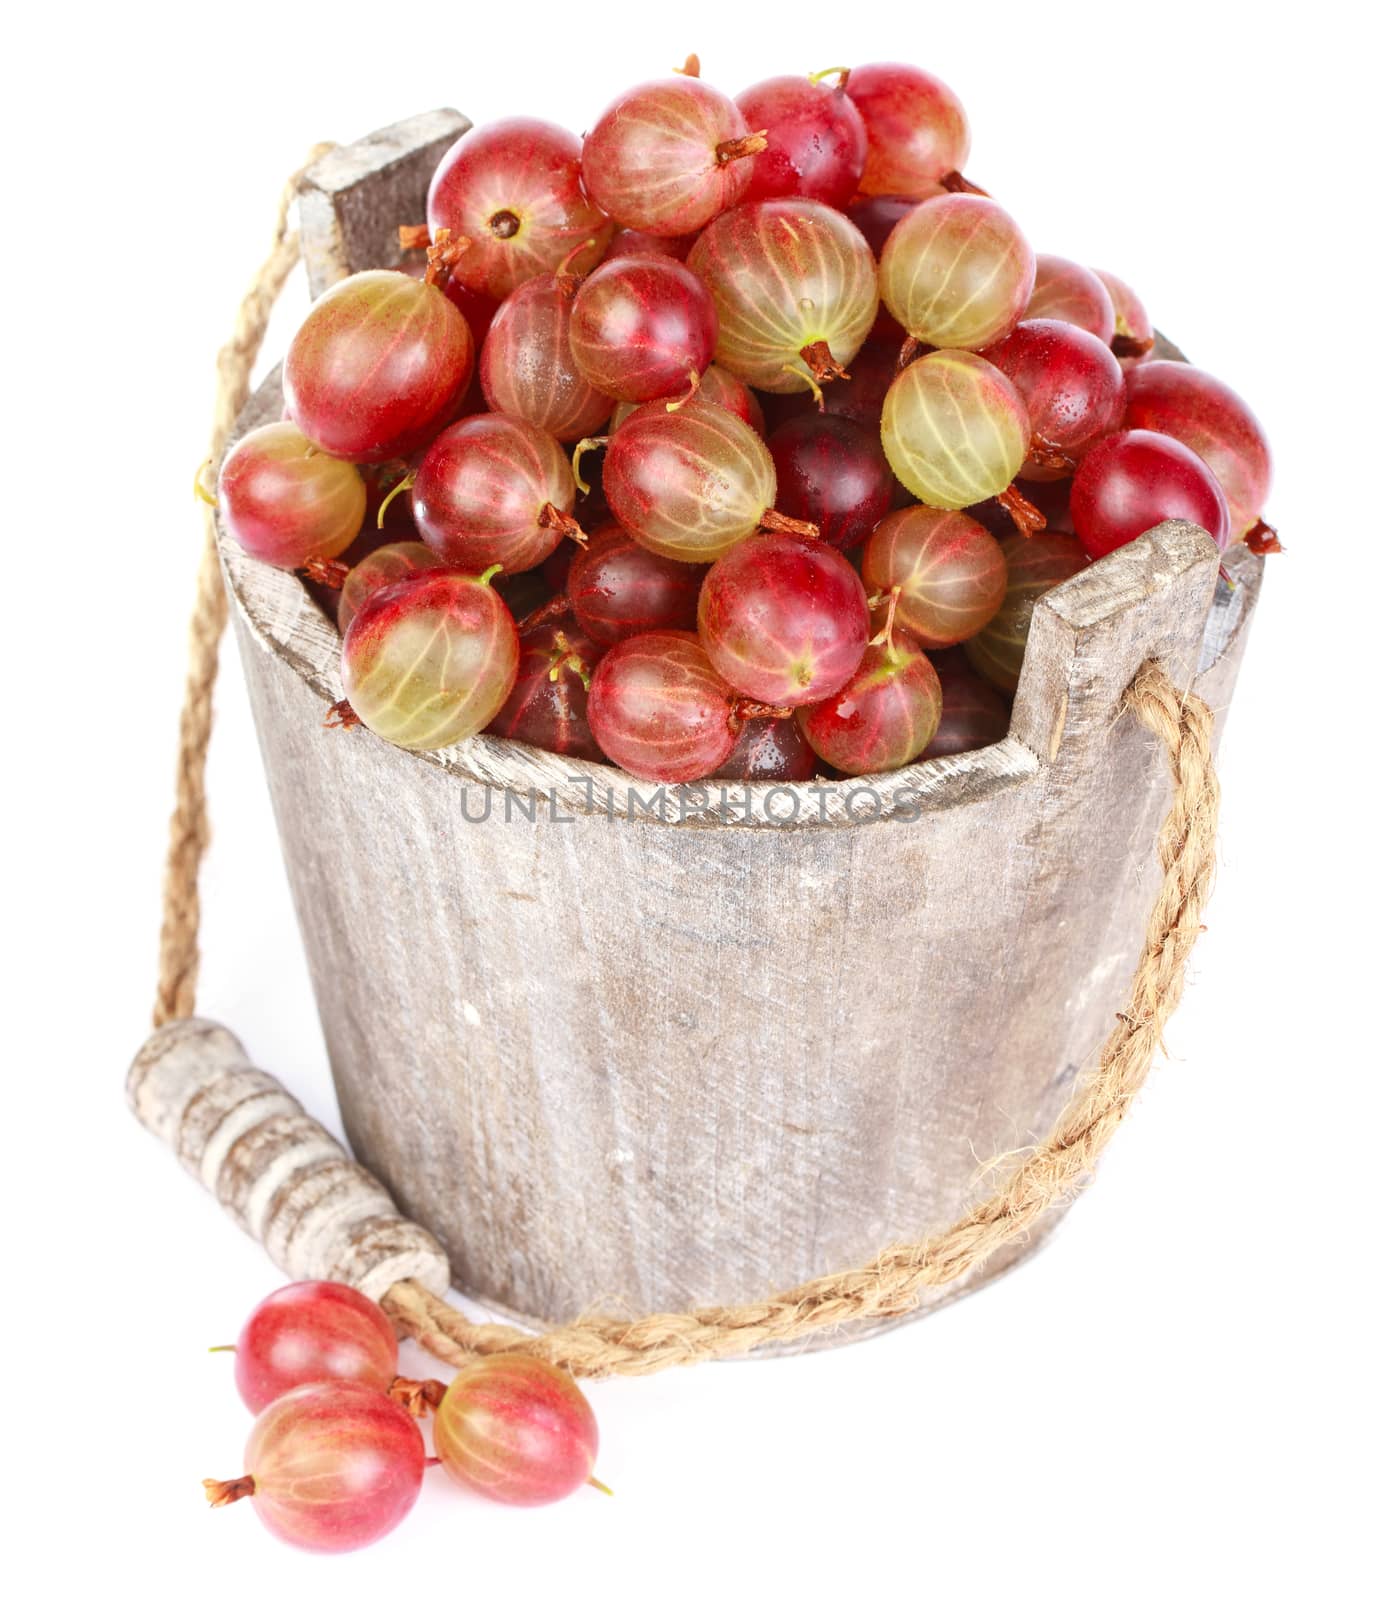 Ripe gooseberry in wooden bucket on white background